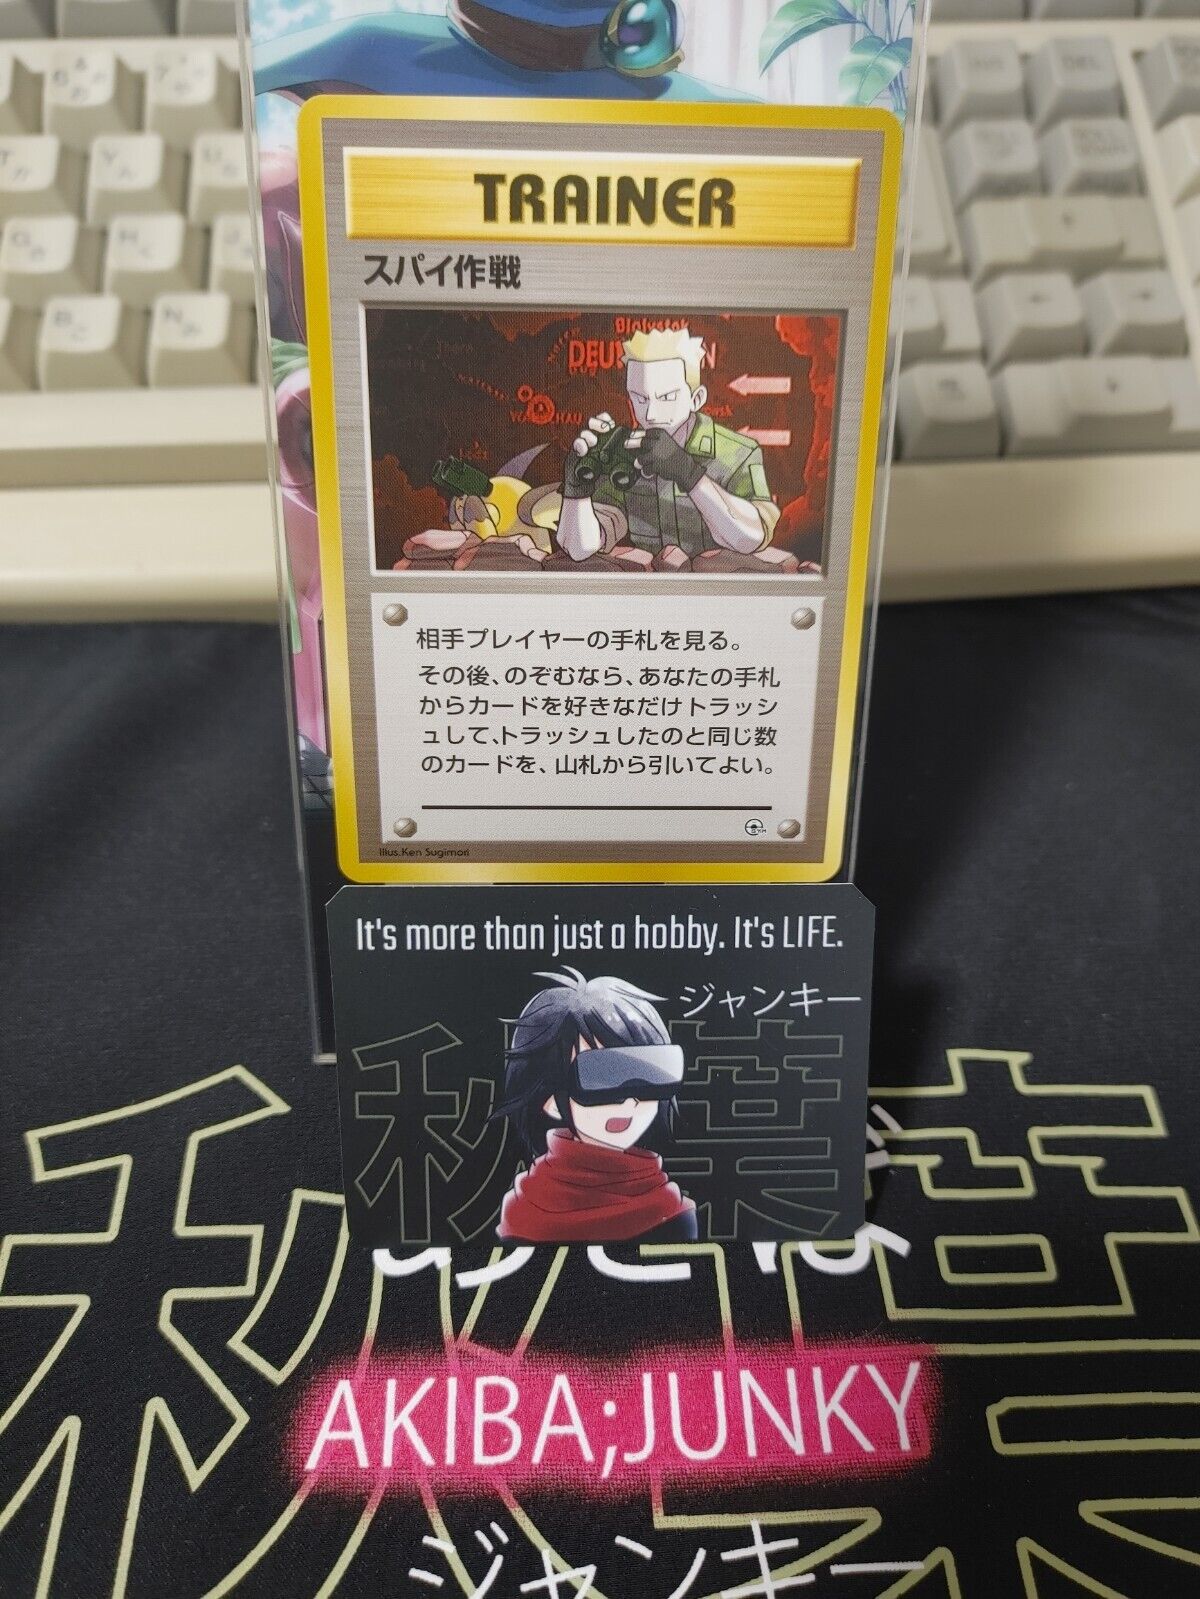 Lt. Surge Trainer Pokemon Secret Mission Japanese Vintage Card Japan Original